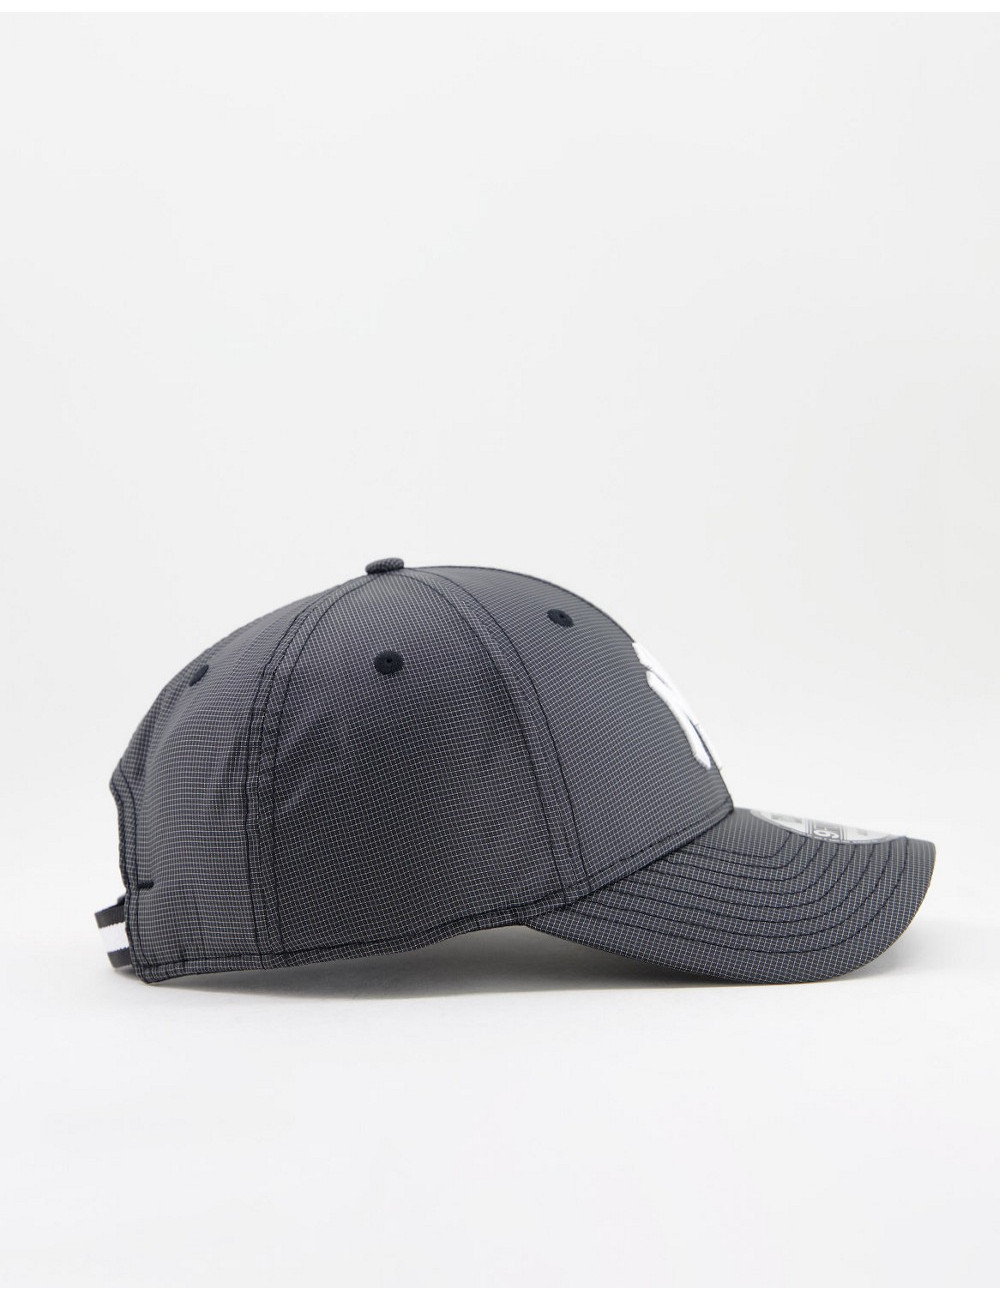 New Era 9forty cap in black